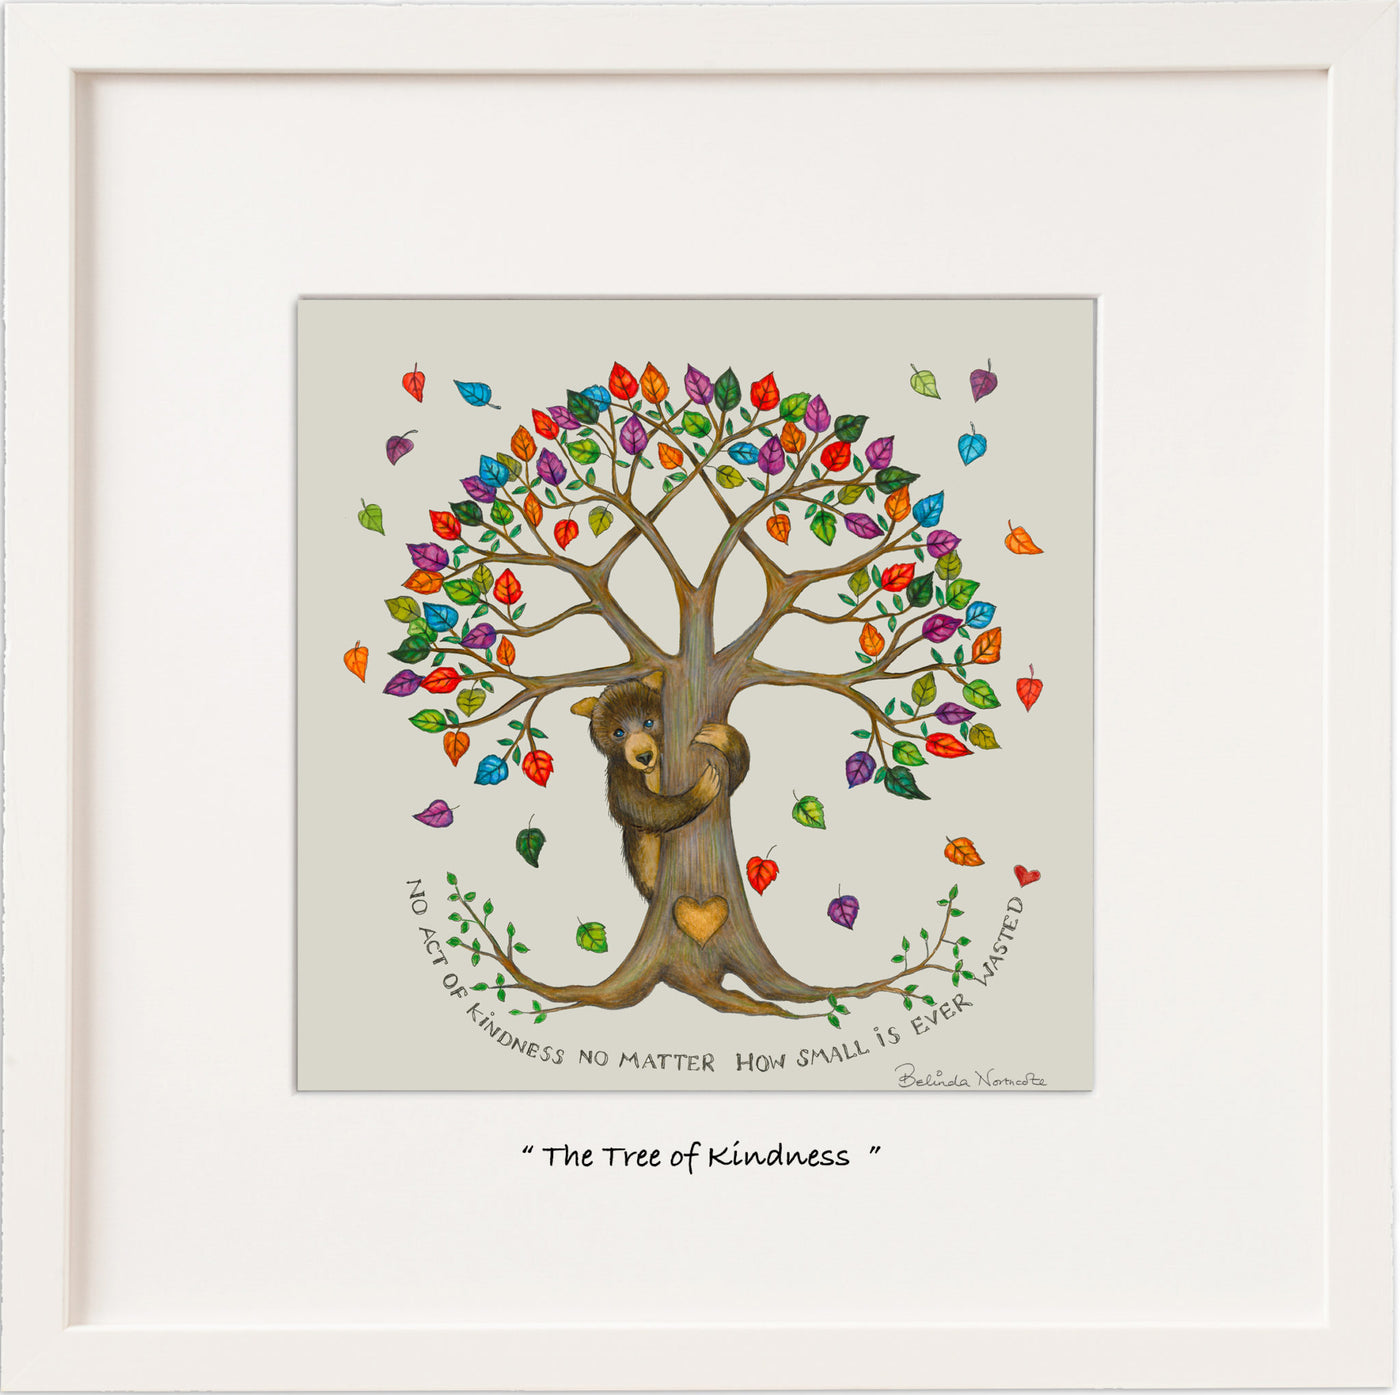 Belinda Northcote 'The Tree of Kindness' Framed Print*